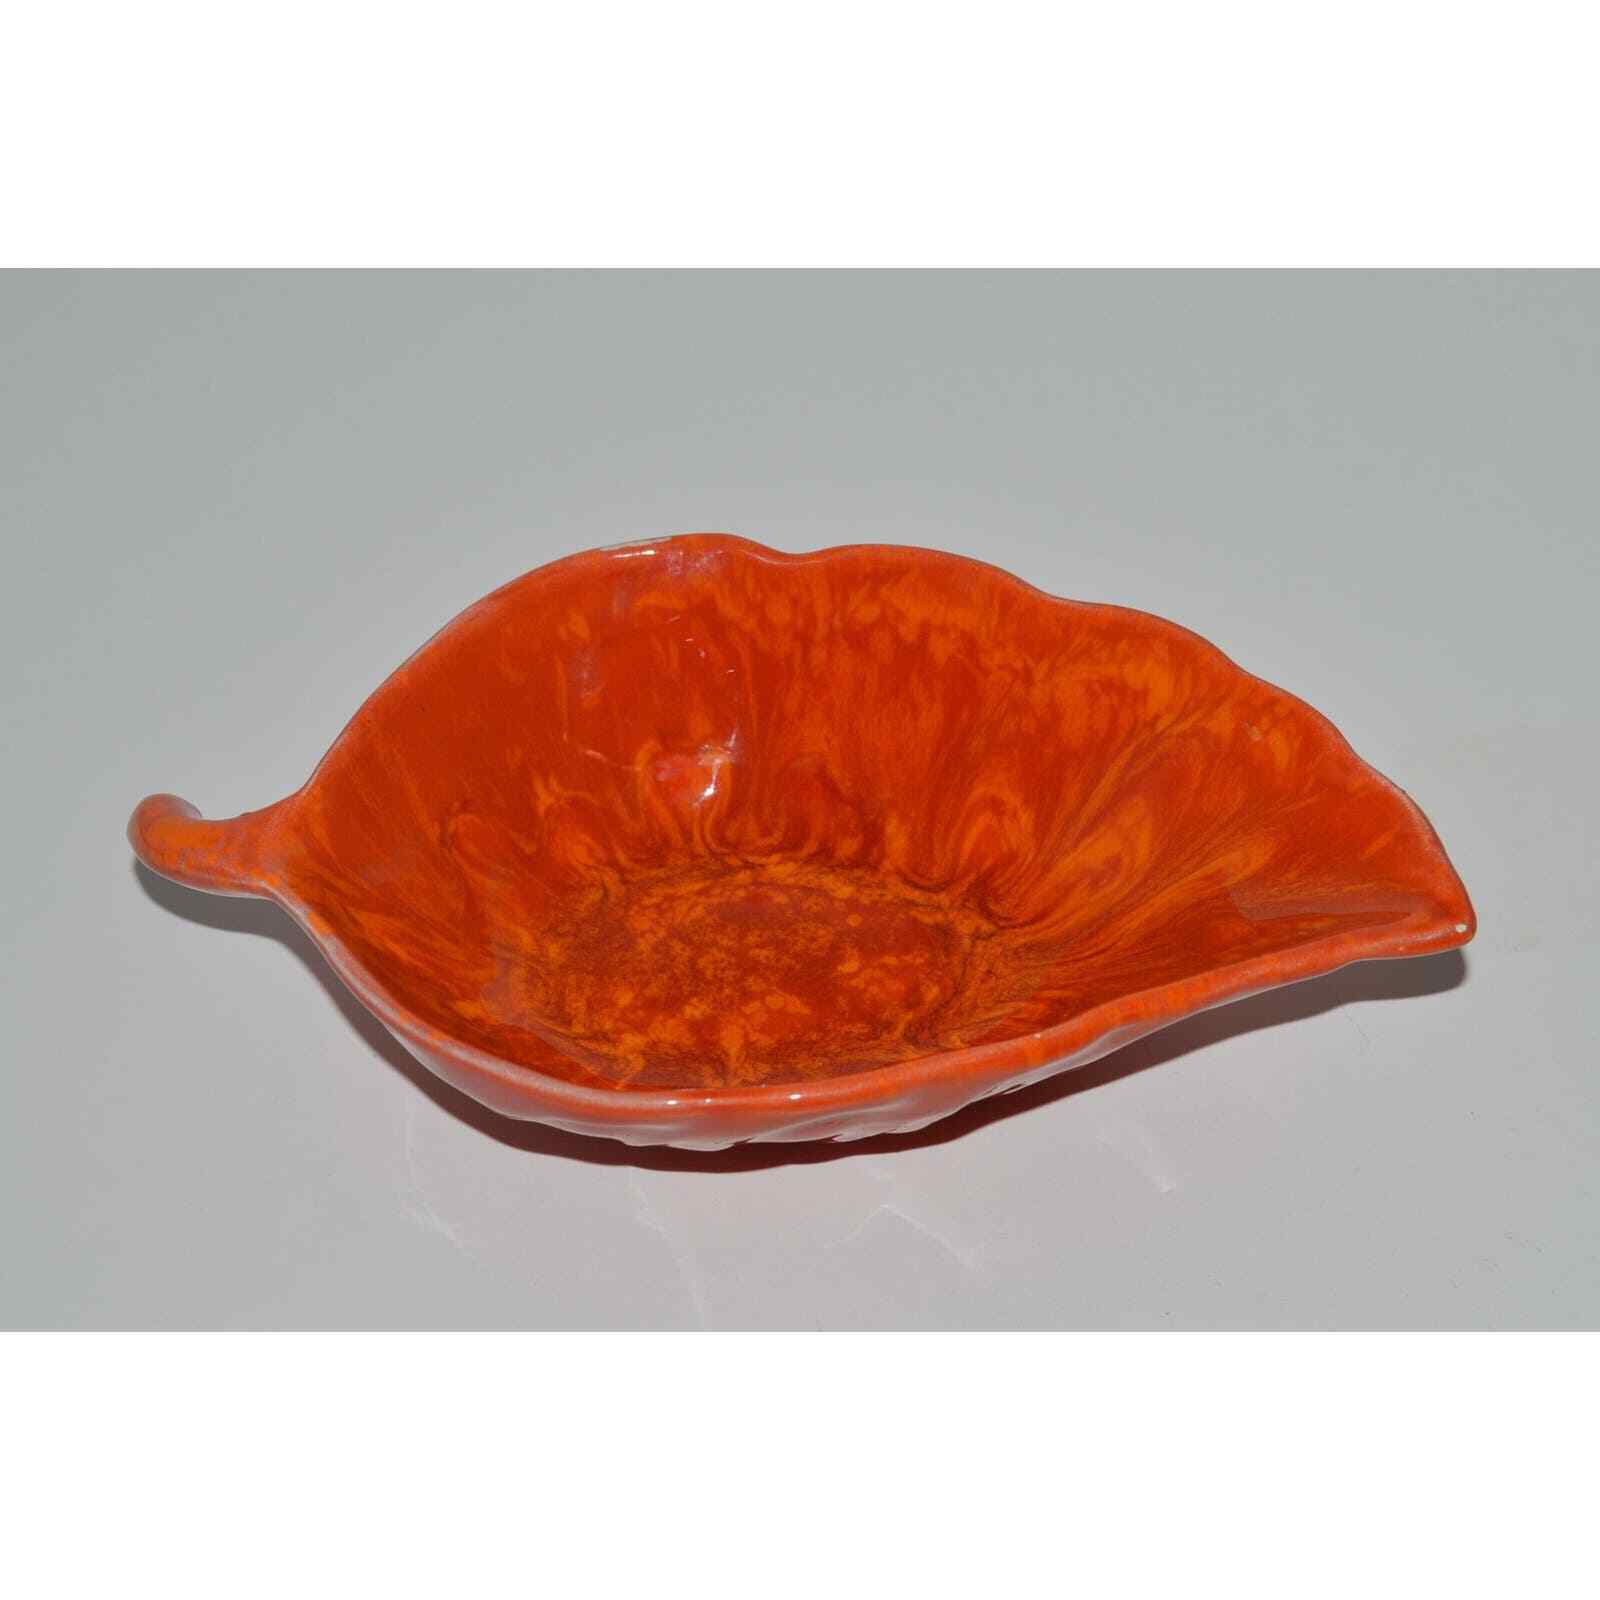 Orange USA Pottery Leaf Dish, Leaf Shaped Bowl Planter, Marked 2220 B USA 